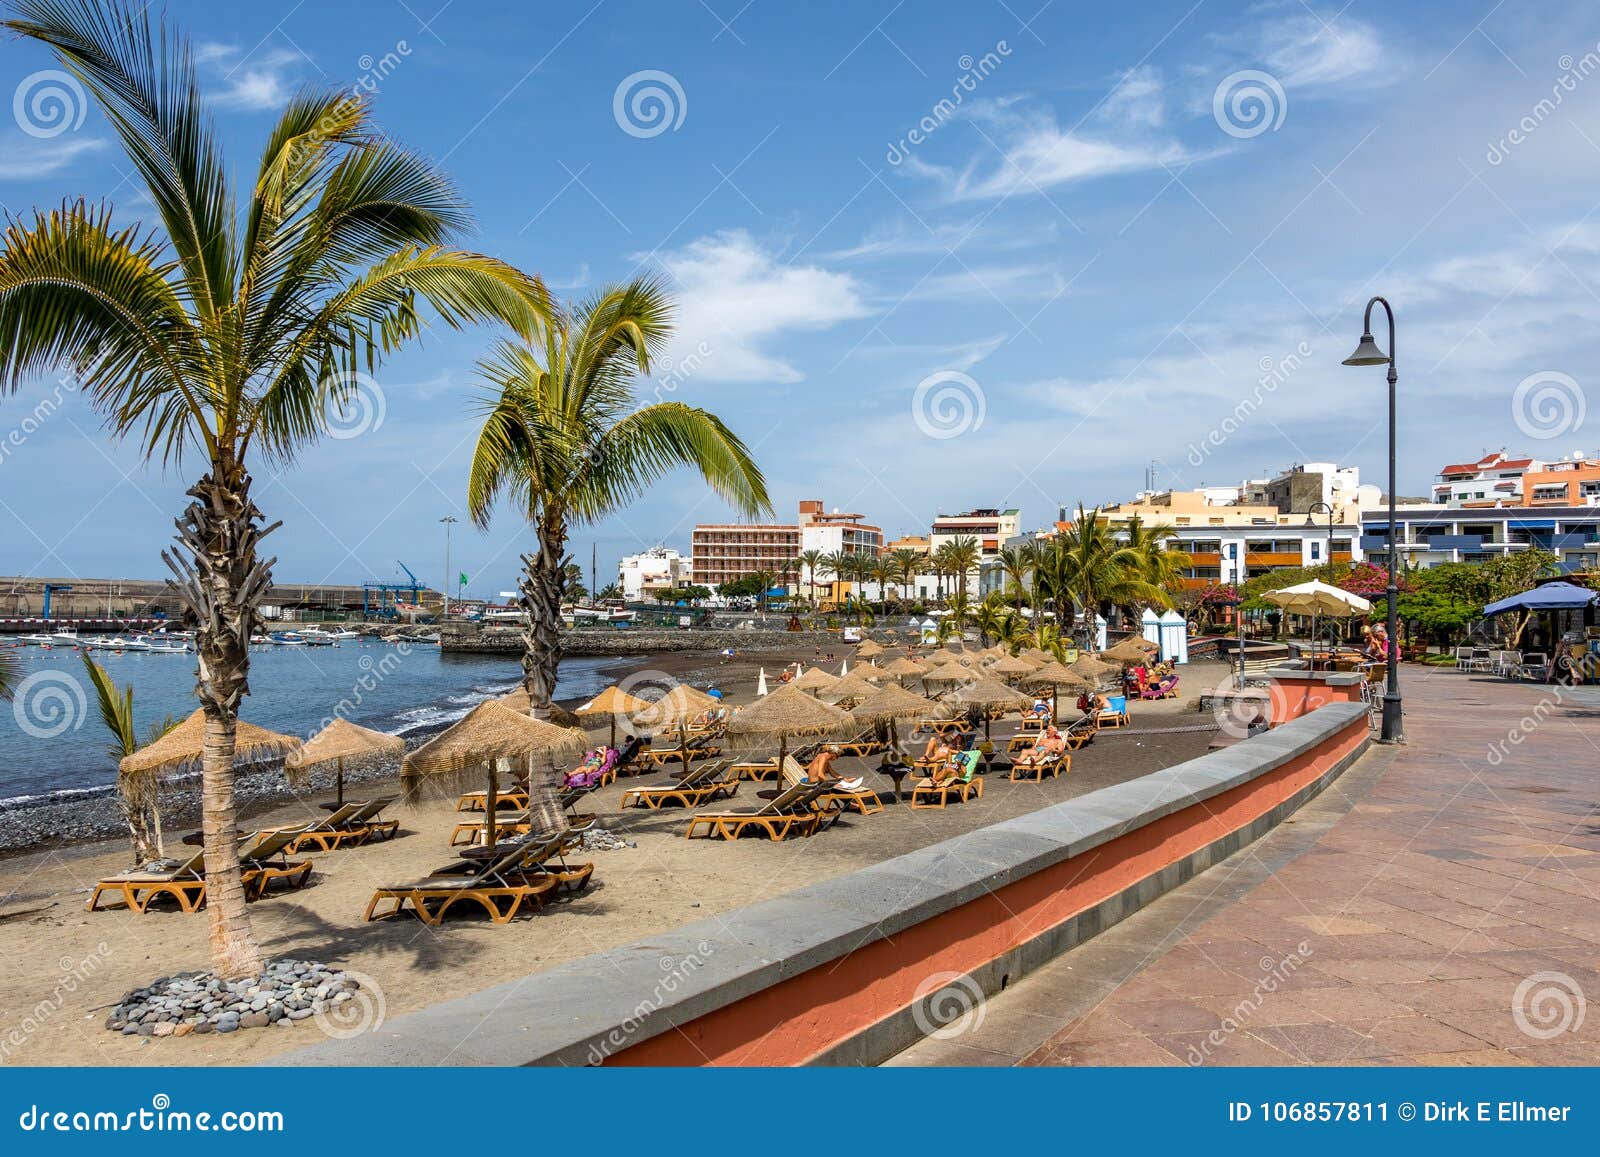 Playa San Juan Tenerife Editorial Photo Image Of Coastline